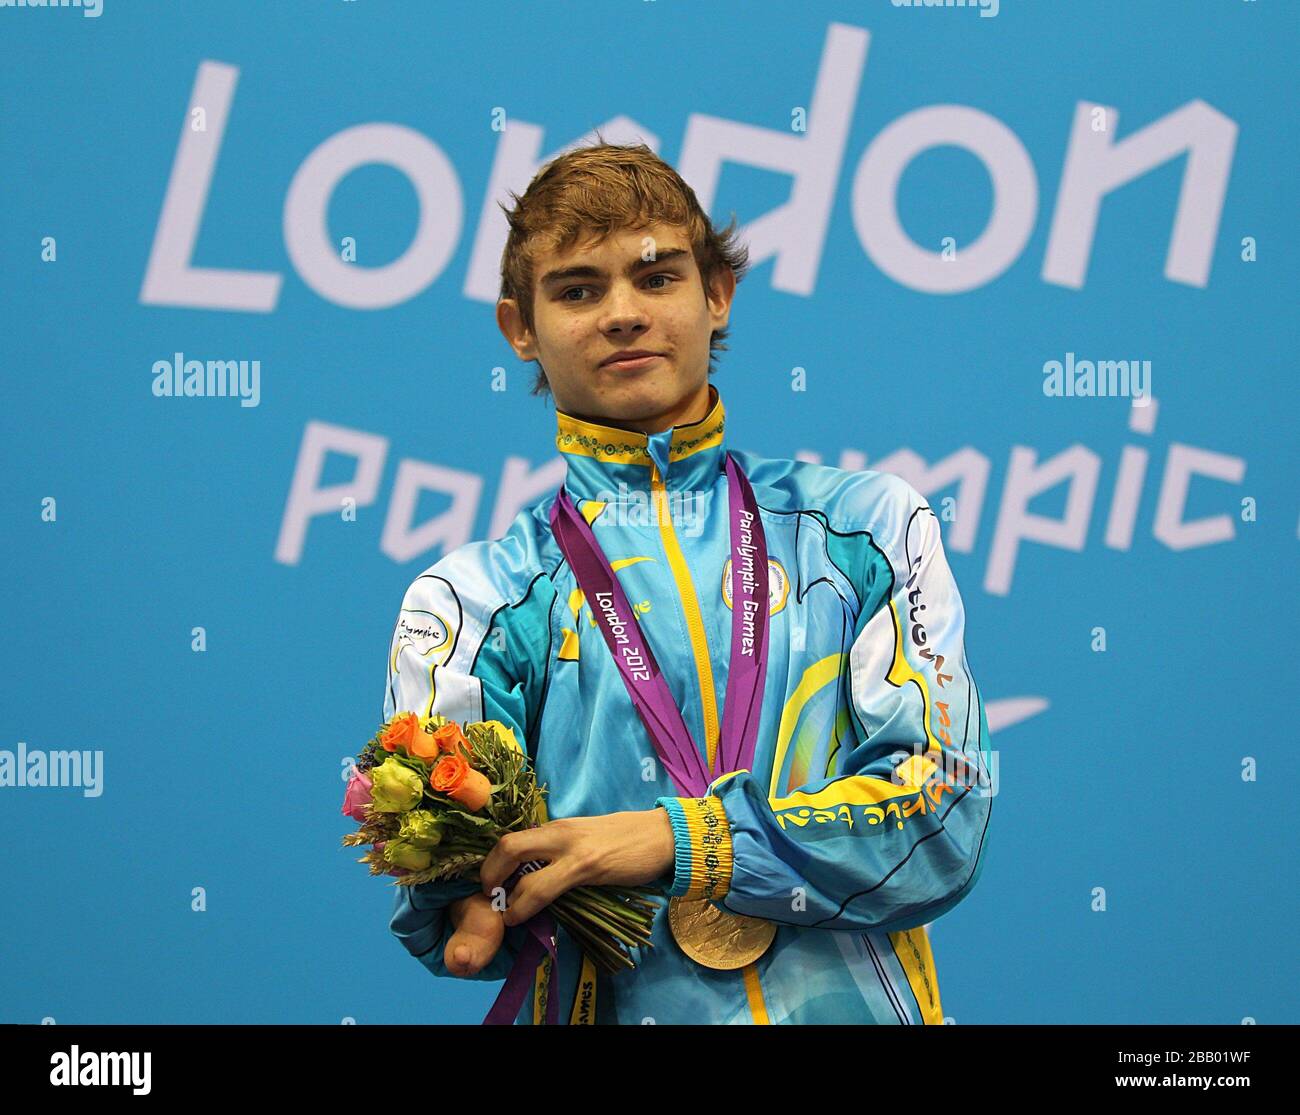 Gold Medalist Ukraine's Yevheniy Bohodayko after the Men's 100m Breaststroke - SB6 Final at the Aquatics Centre, London. Stock Photo